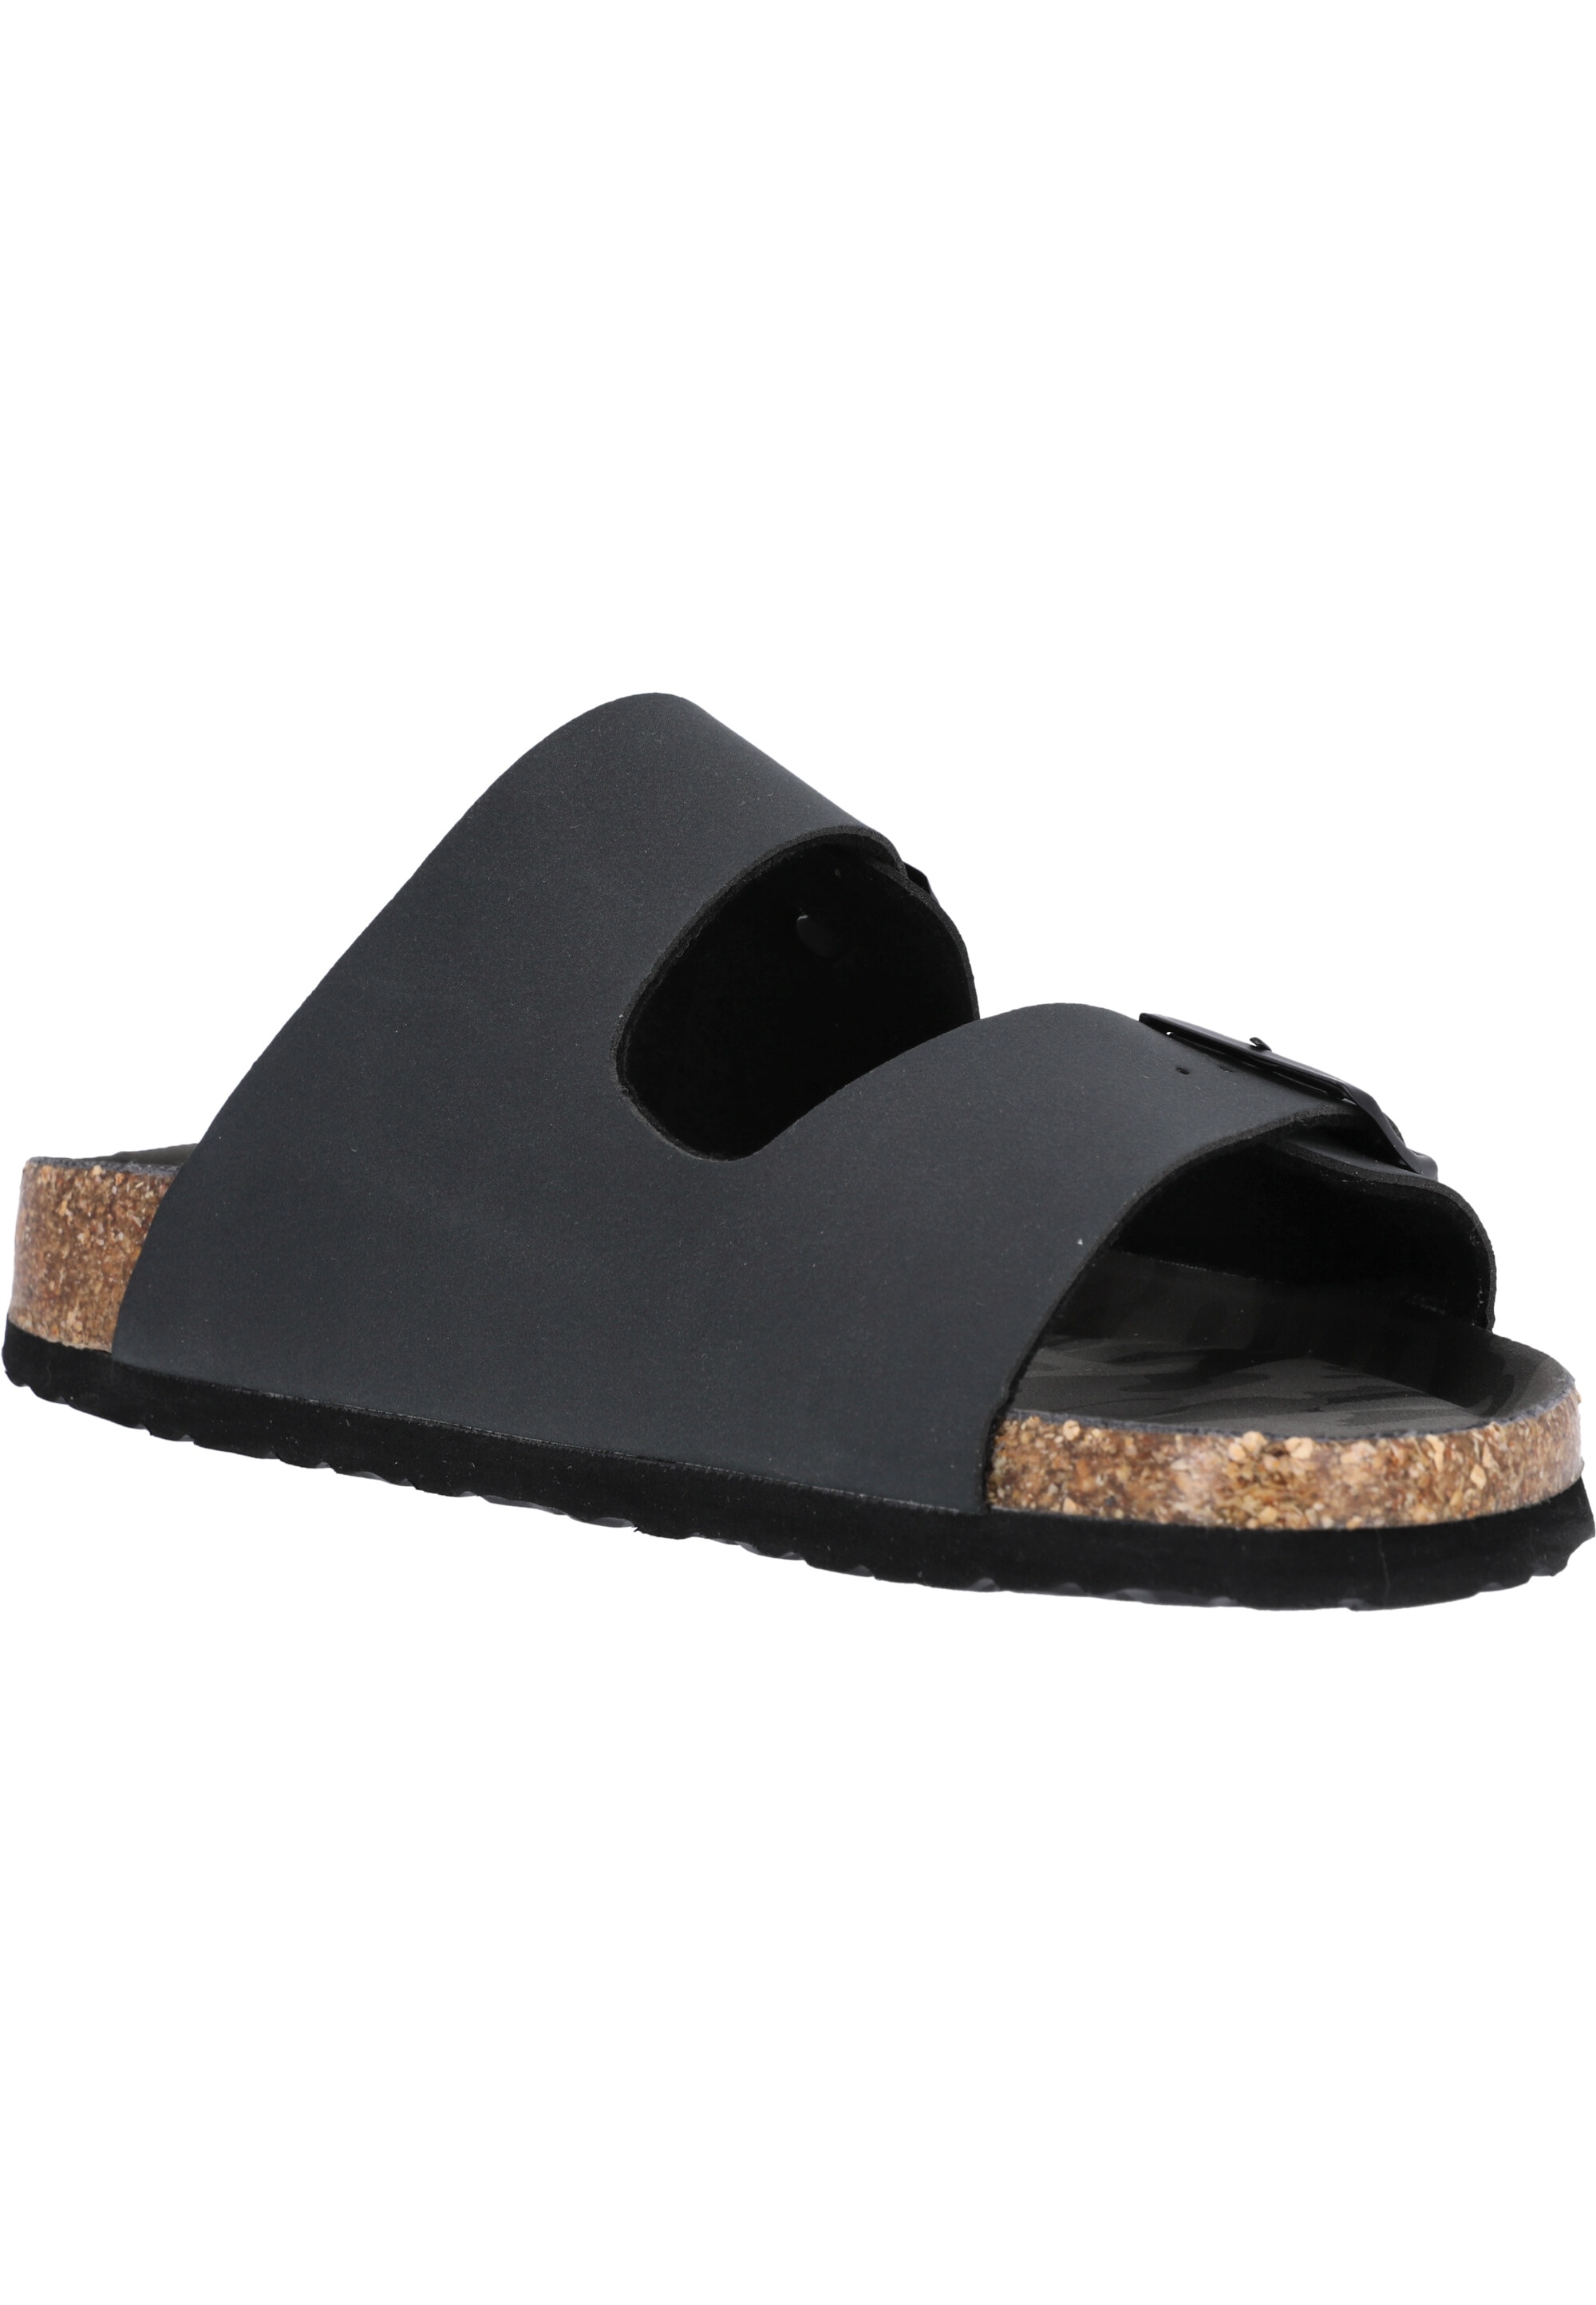 CRUZ Sandale »Baothan«, mit bequemem Komfort